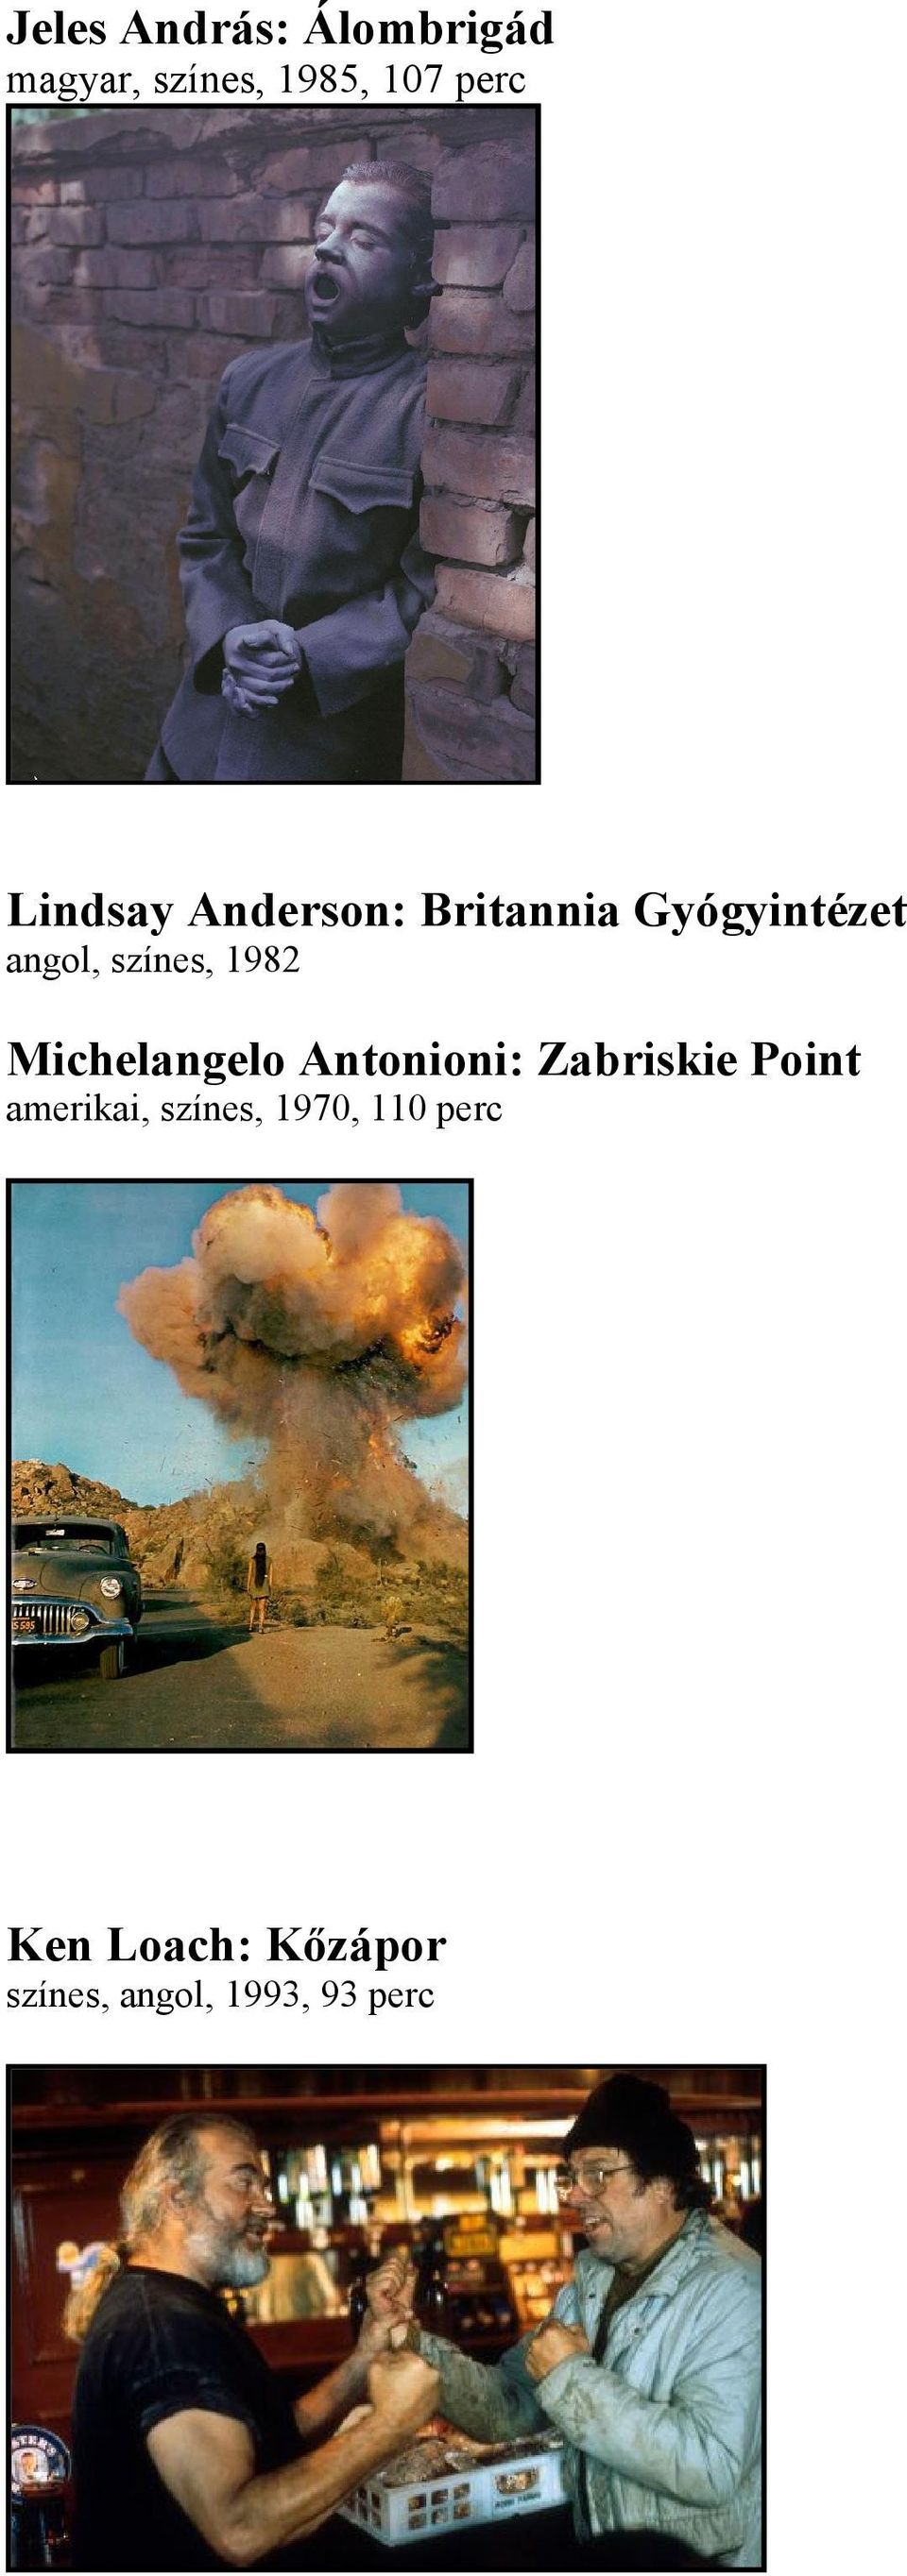 1982 Michelangelo Antonioni: Zabriskie Point amerikai,